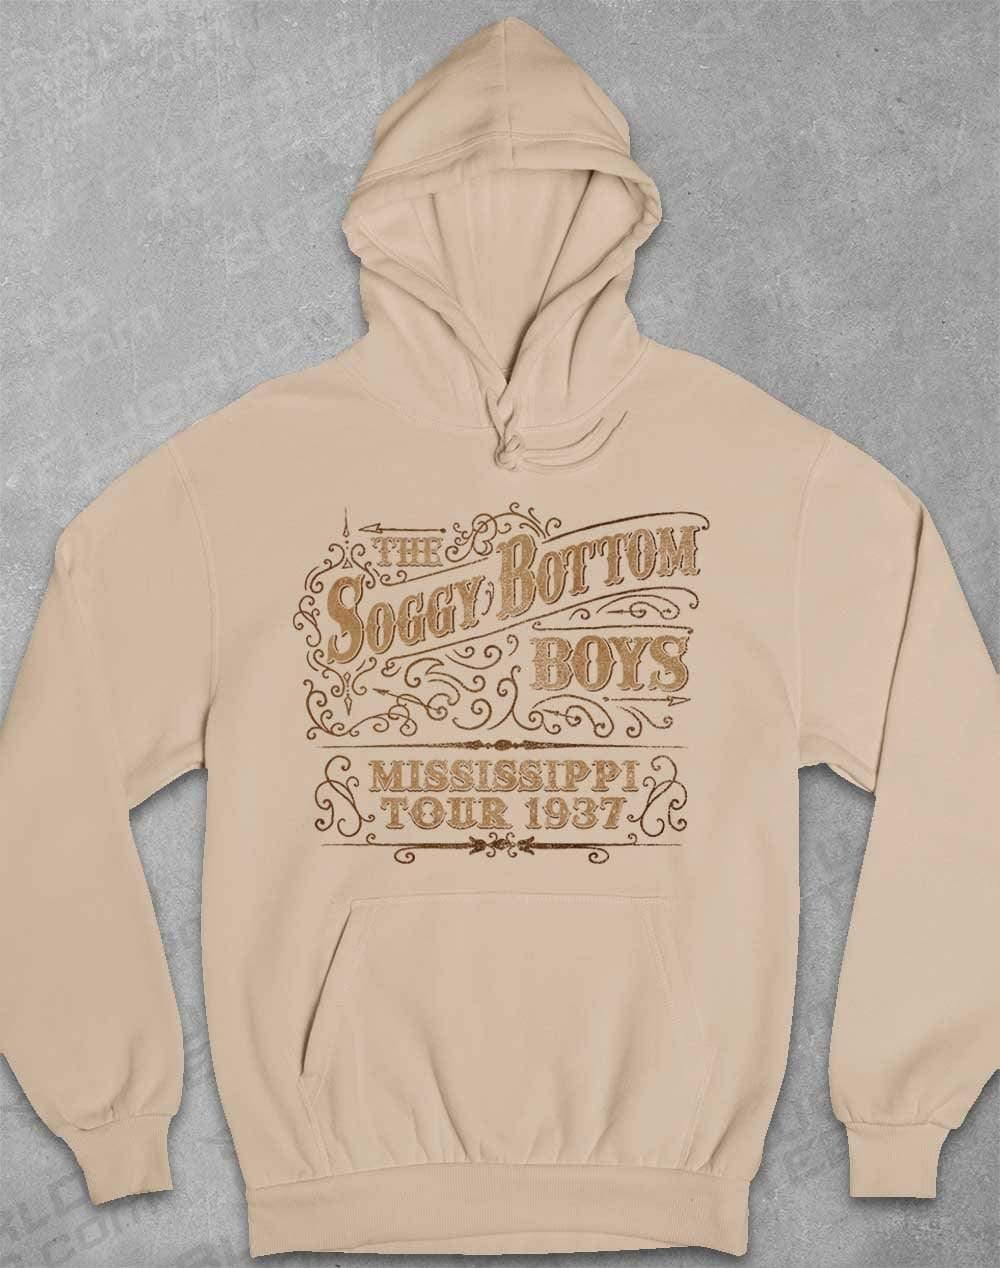 Soggy Bottom Boys Tour 1937 Hoodie XS / Desert Sand  - Off World Tees